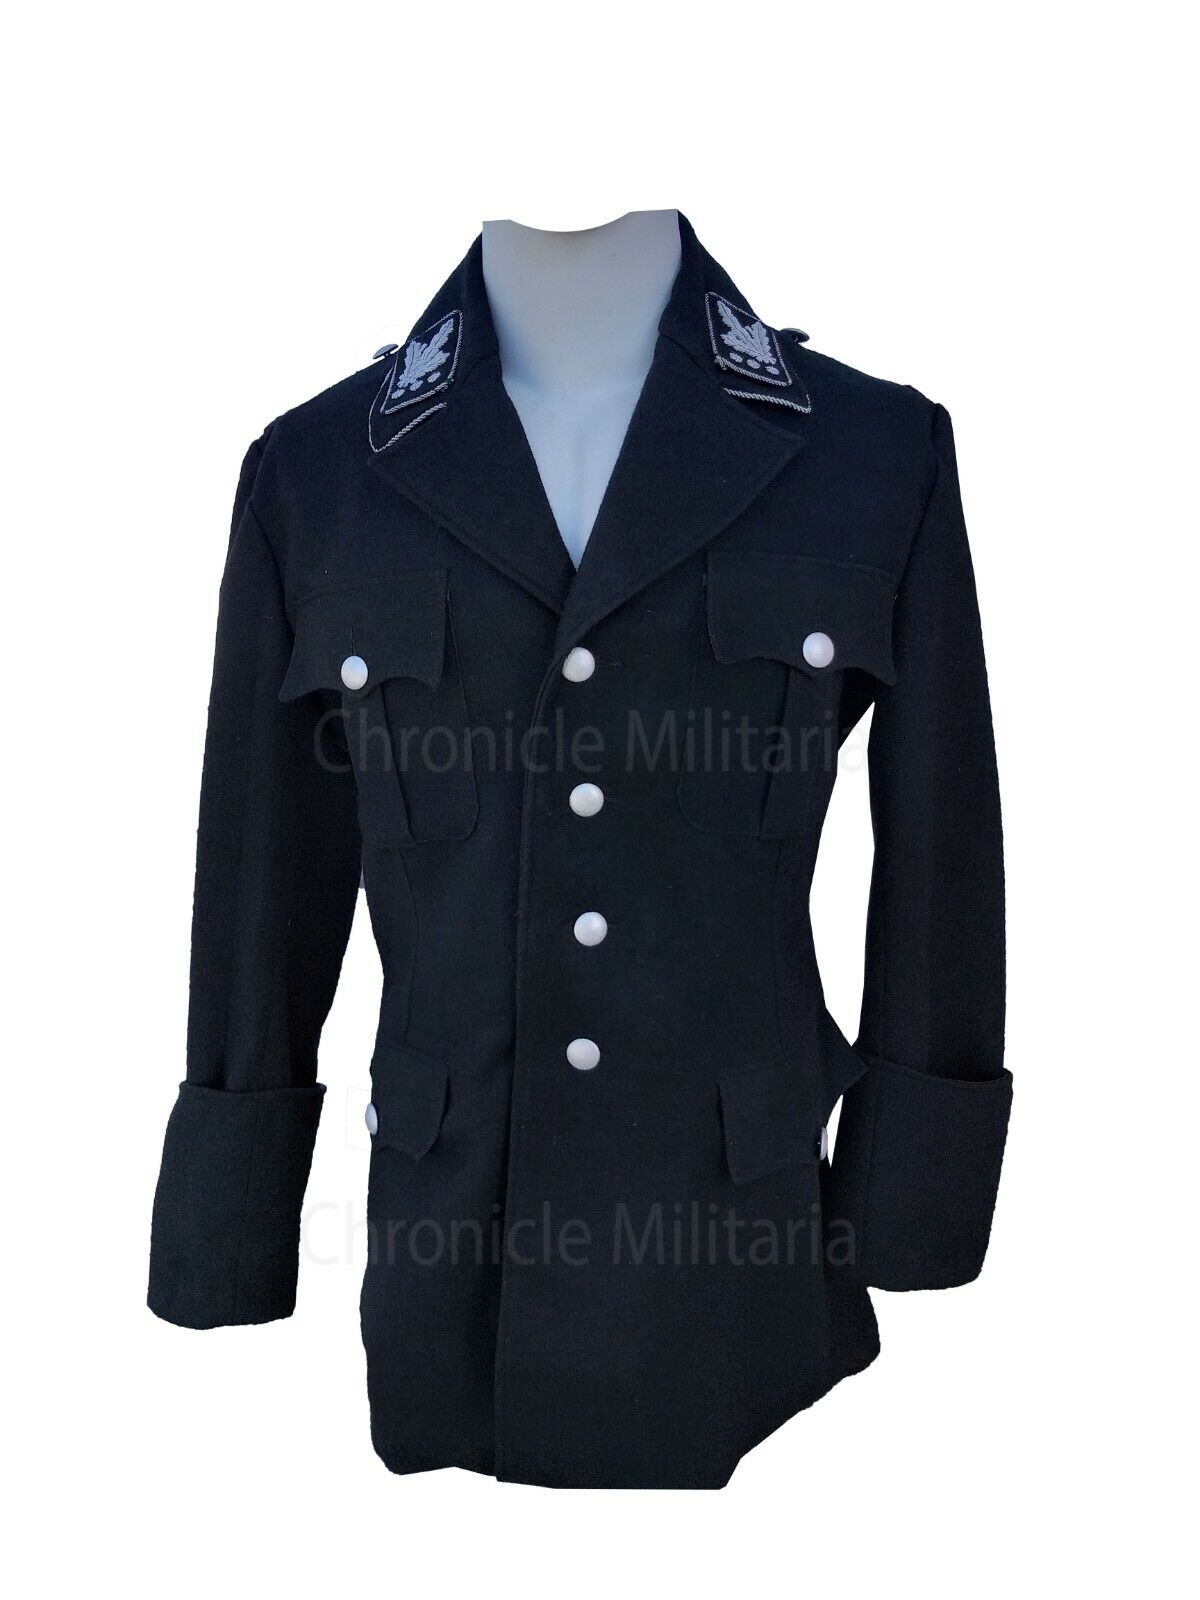 WWII German ss m32 black tunic